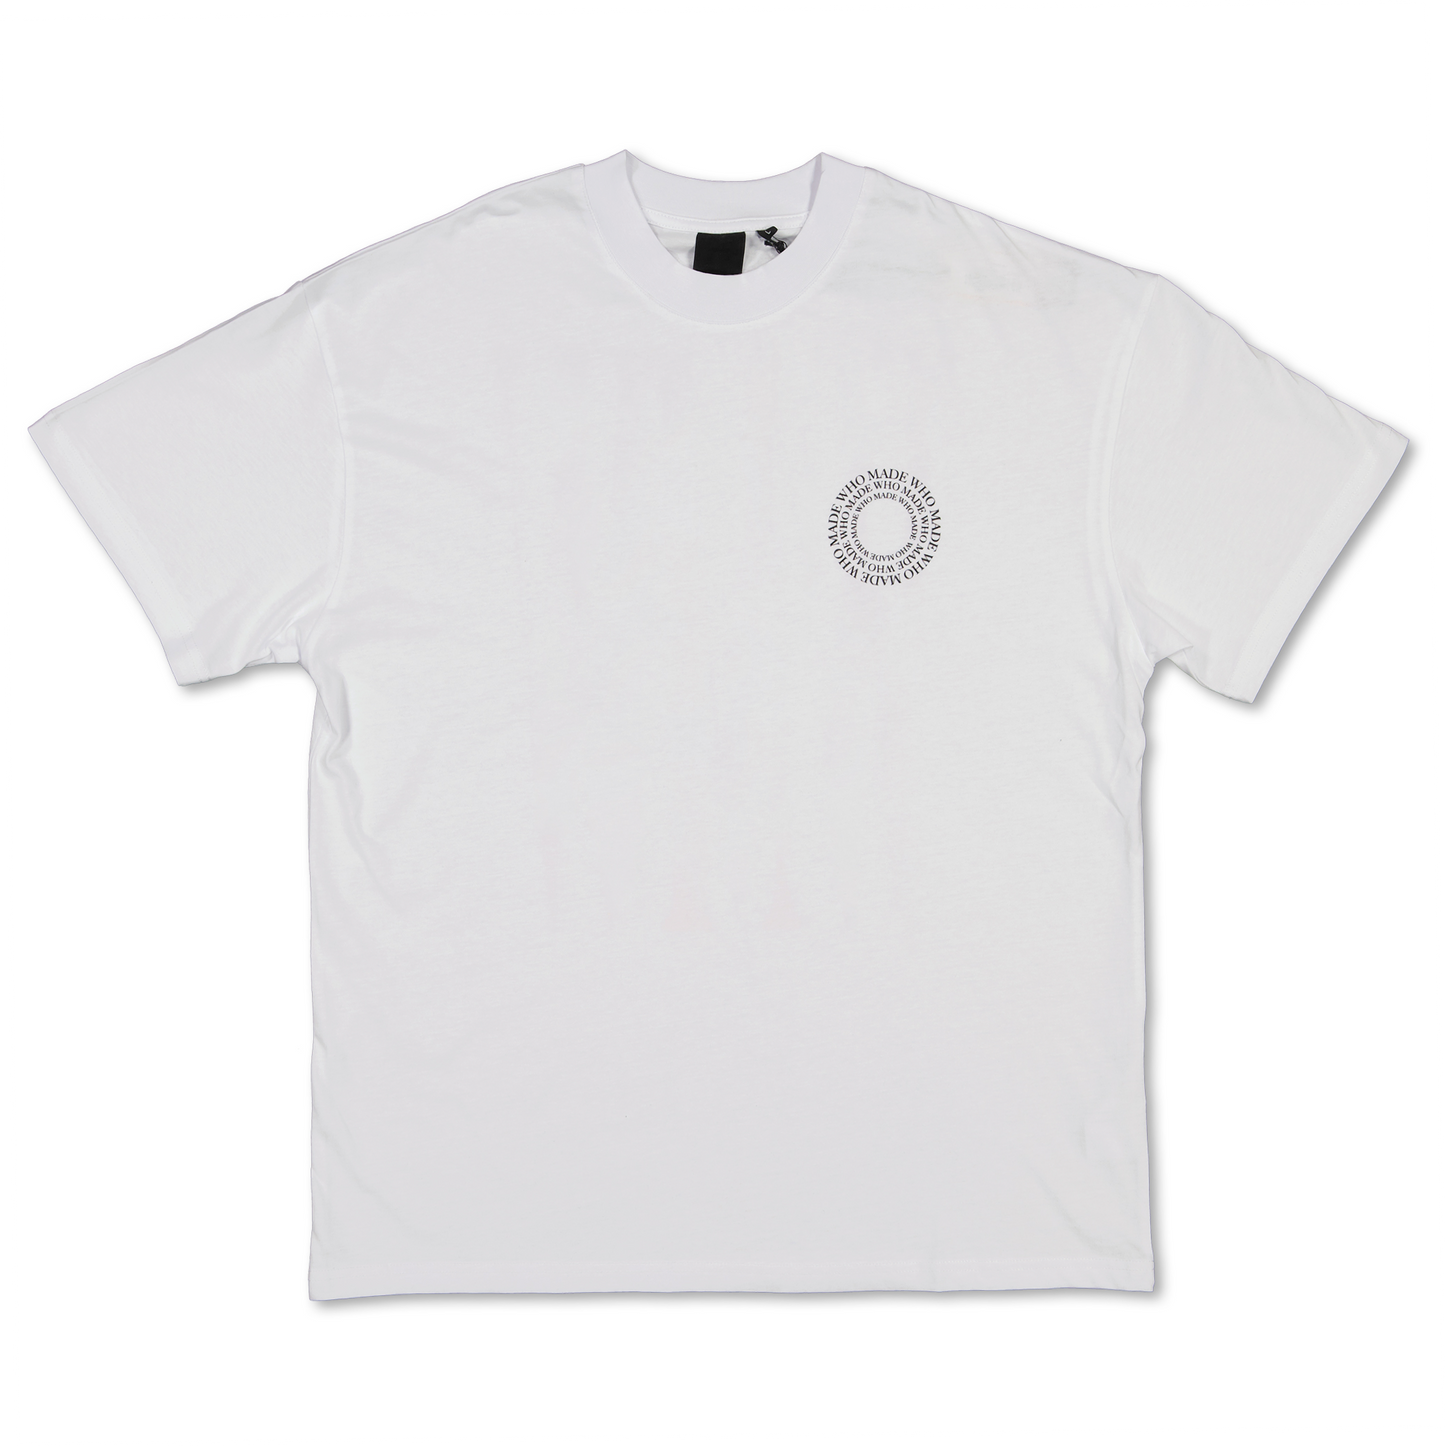 WhoMadeWho - T-Shirt White